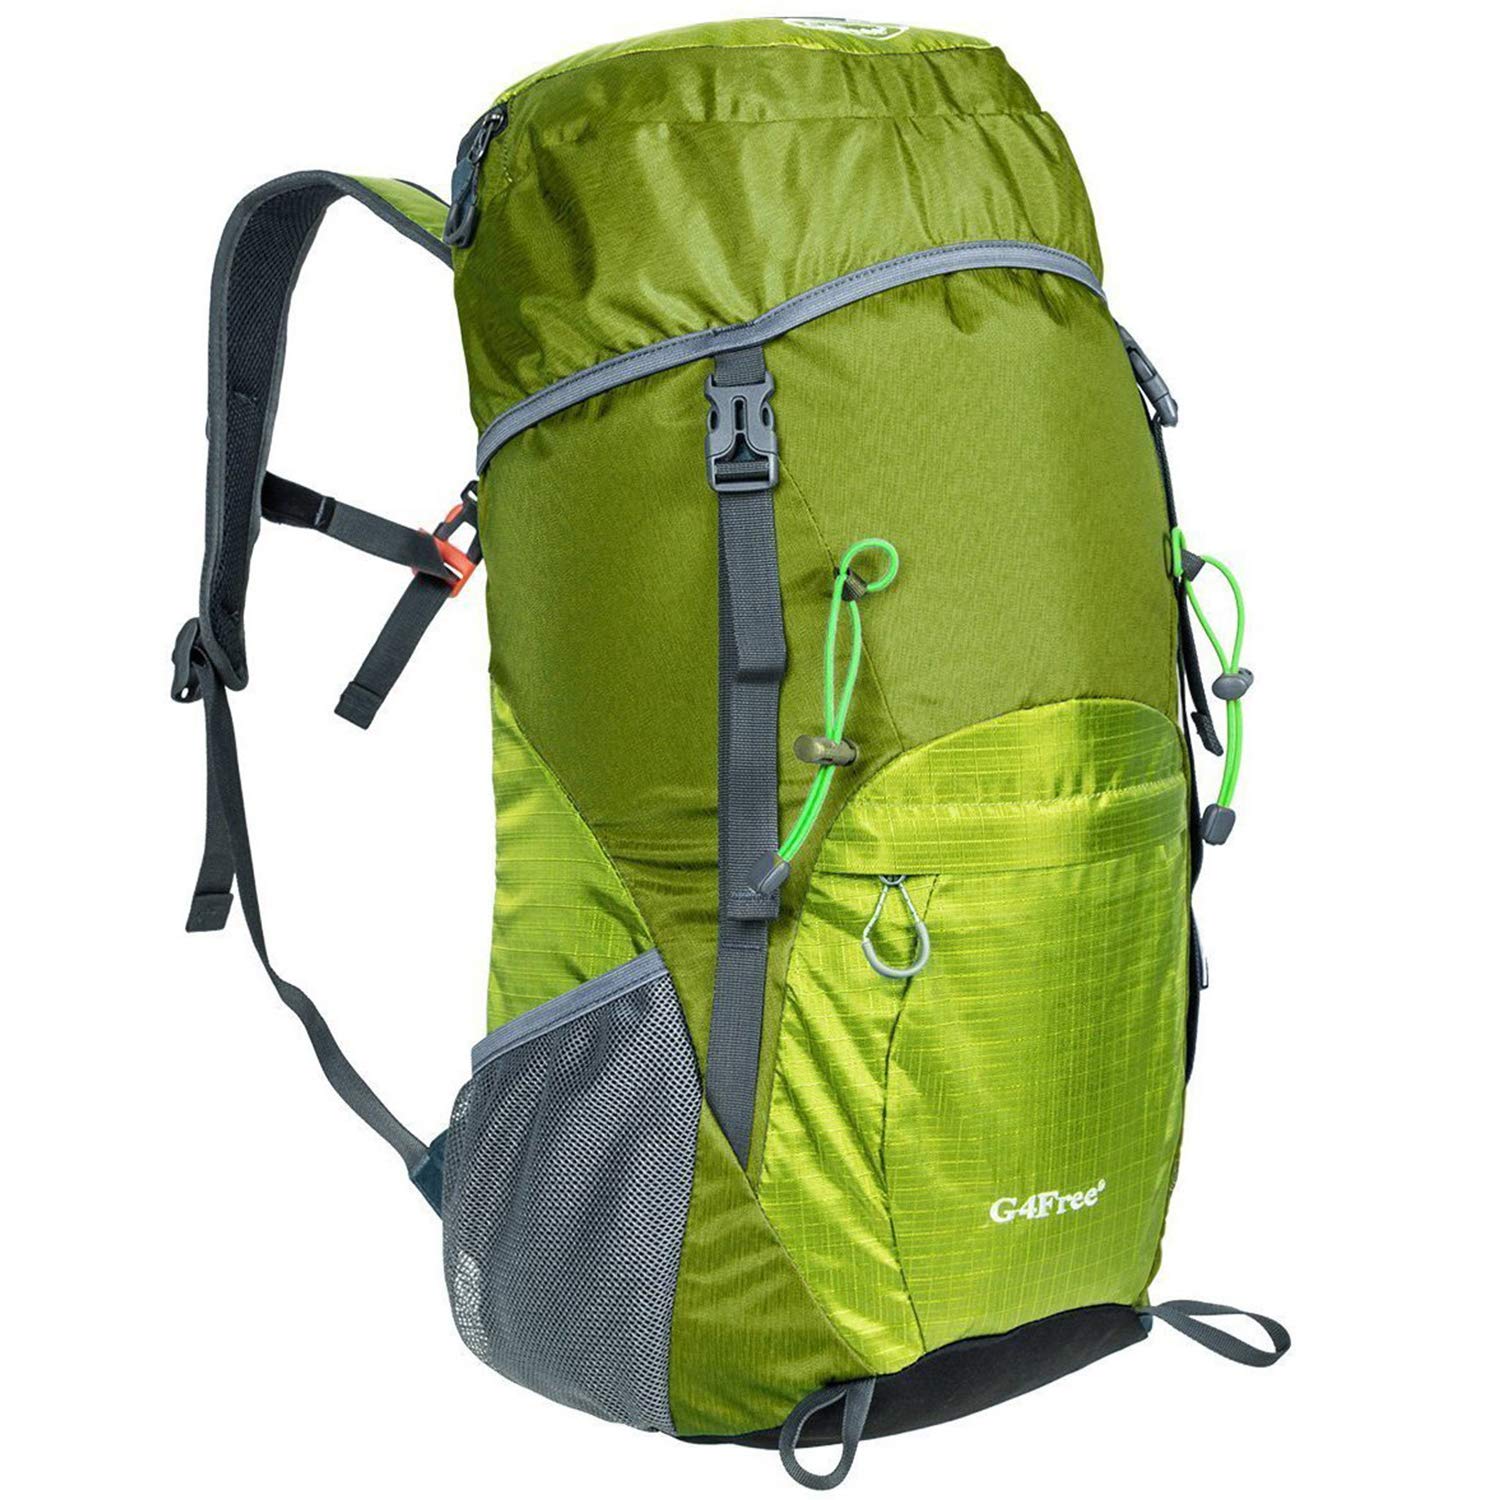 G4Free 超軽量 折畳みバッグ 登山リュック 40l/45l 大容量 防水 ハイキング バックパック 旅行バッグ 軽量 通気 便利グッズ 多機能 男女